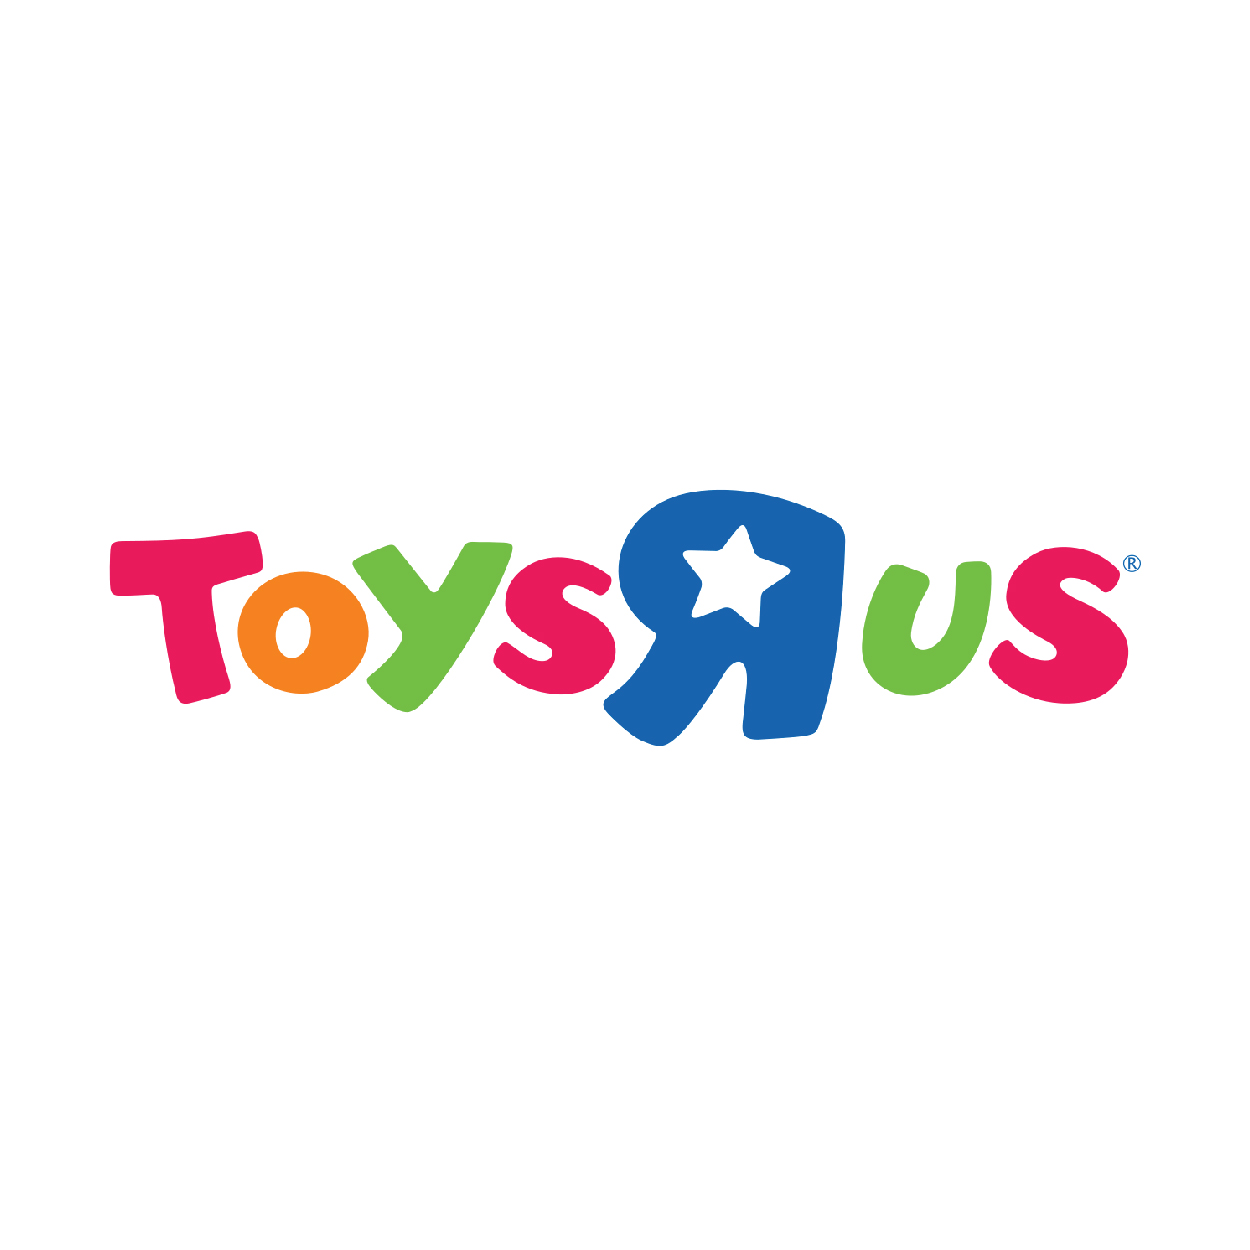 Toys"R"Us